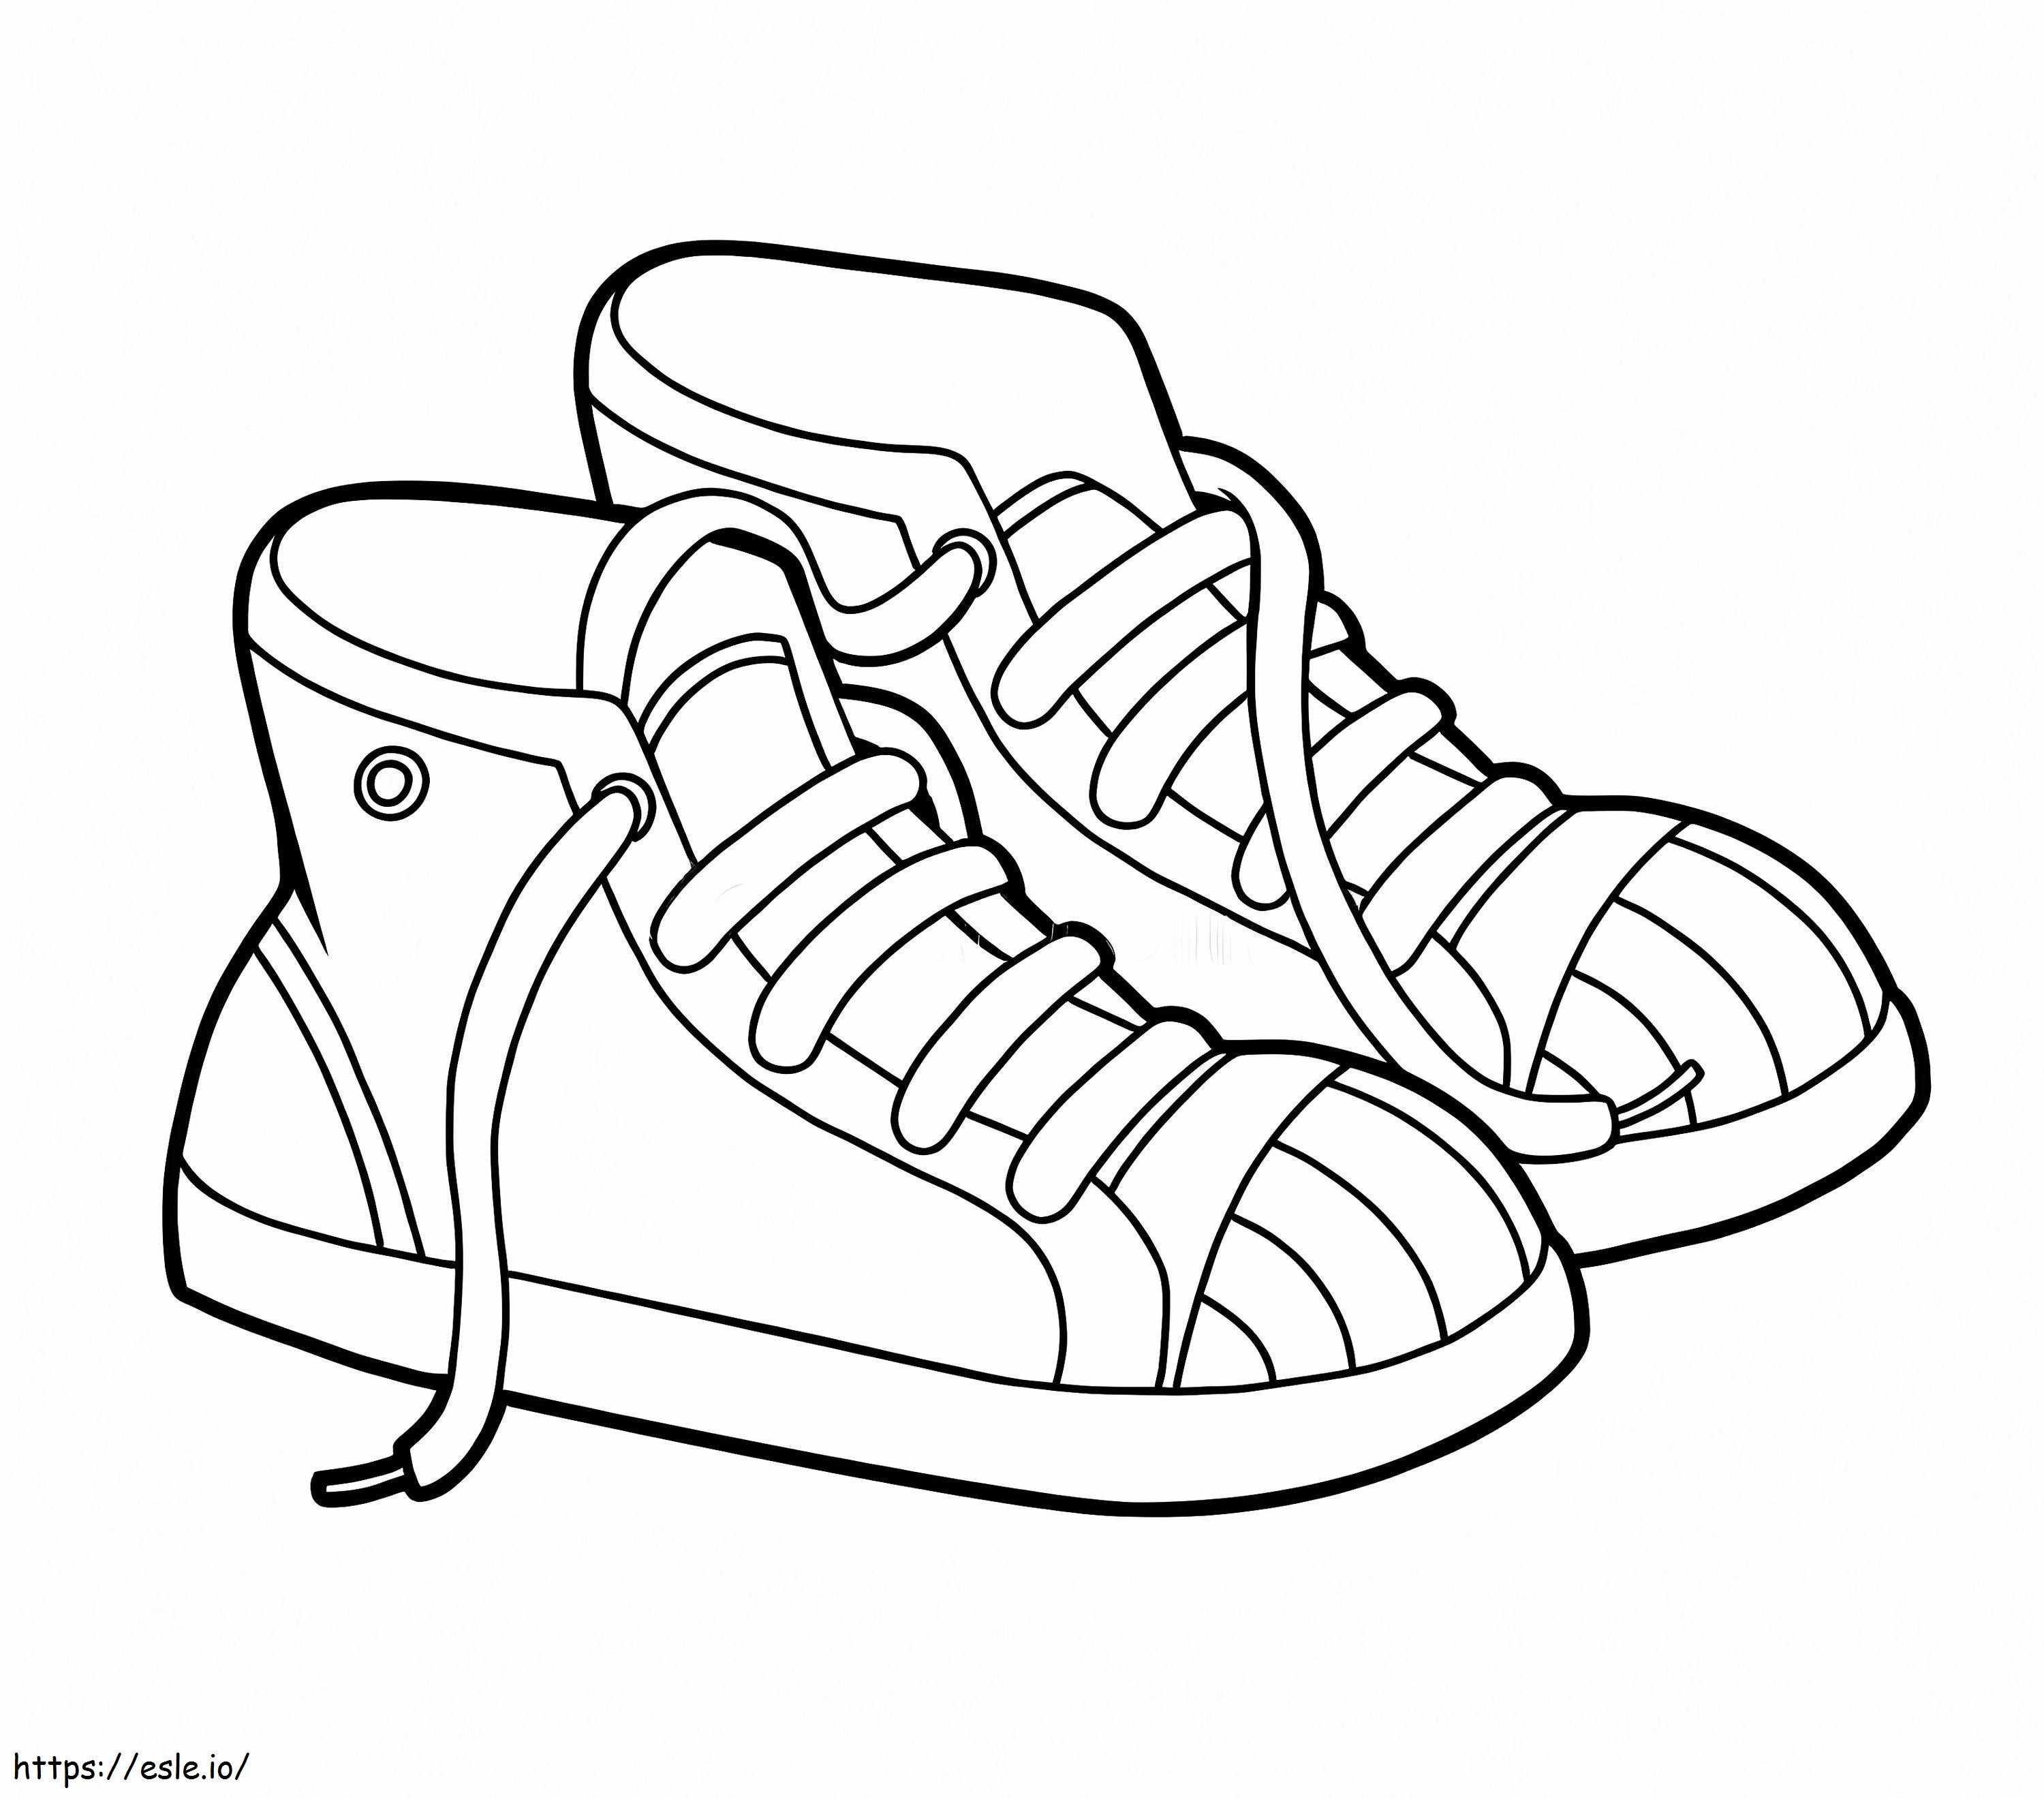 Tennis Shoe coloring page